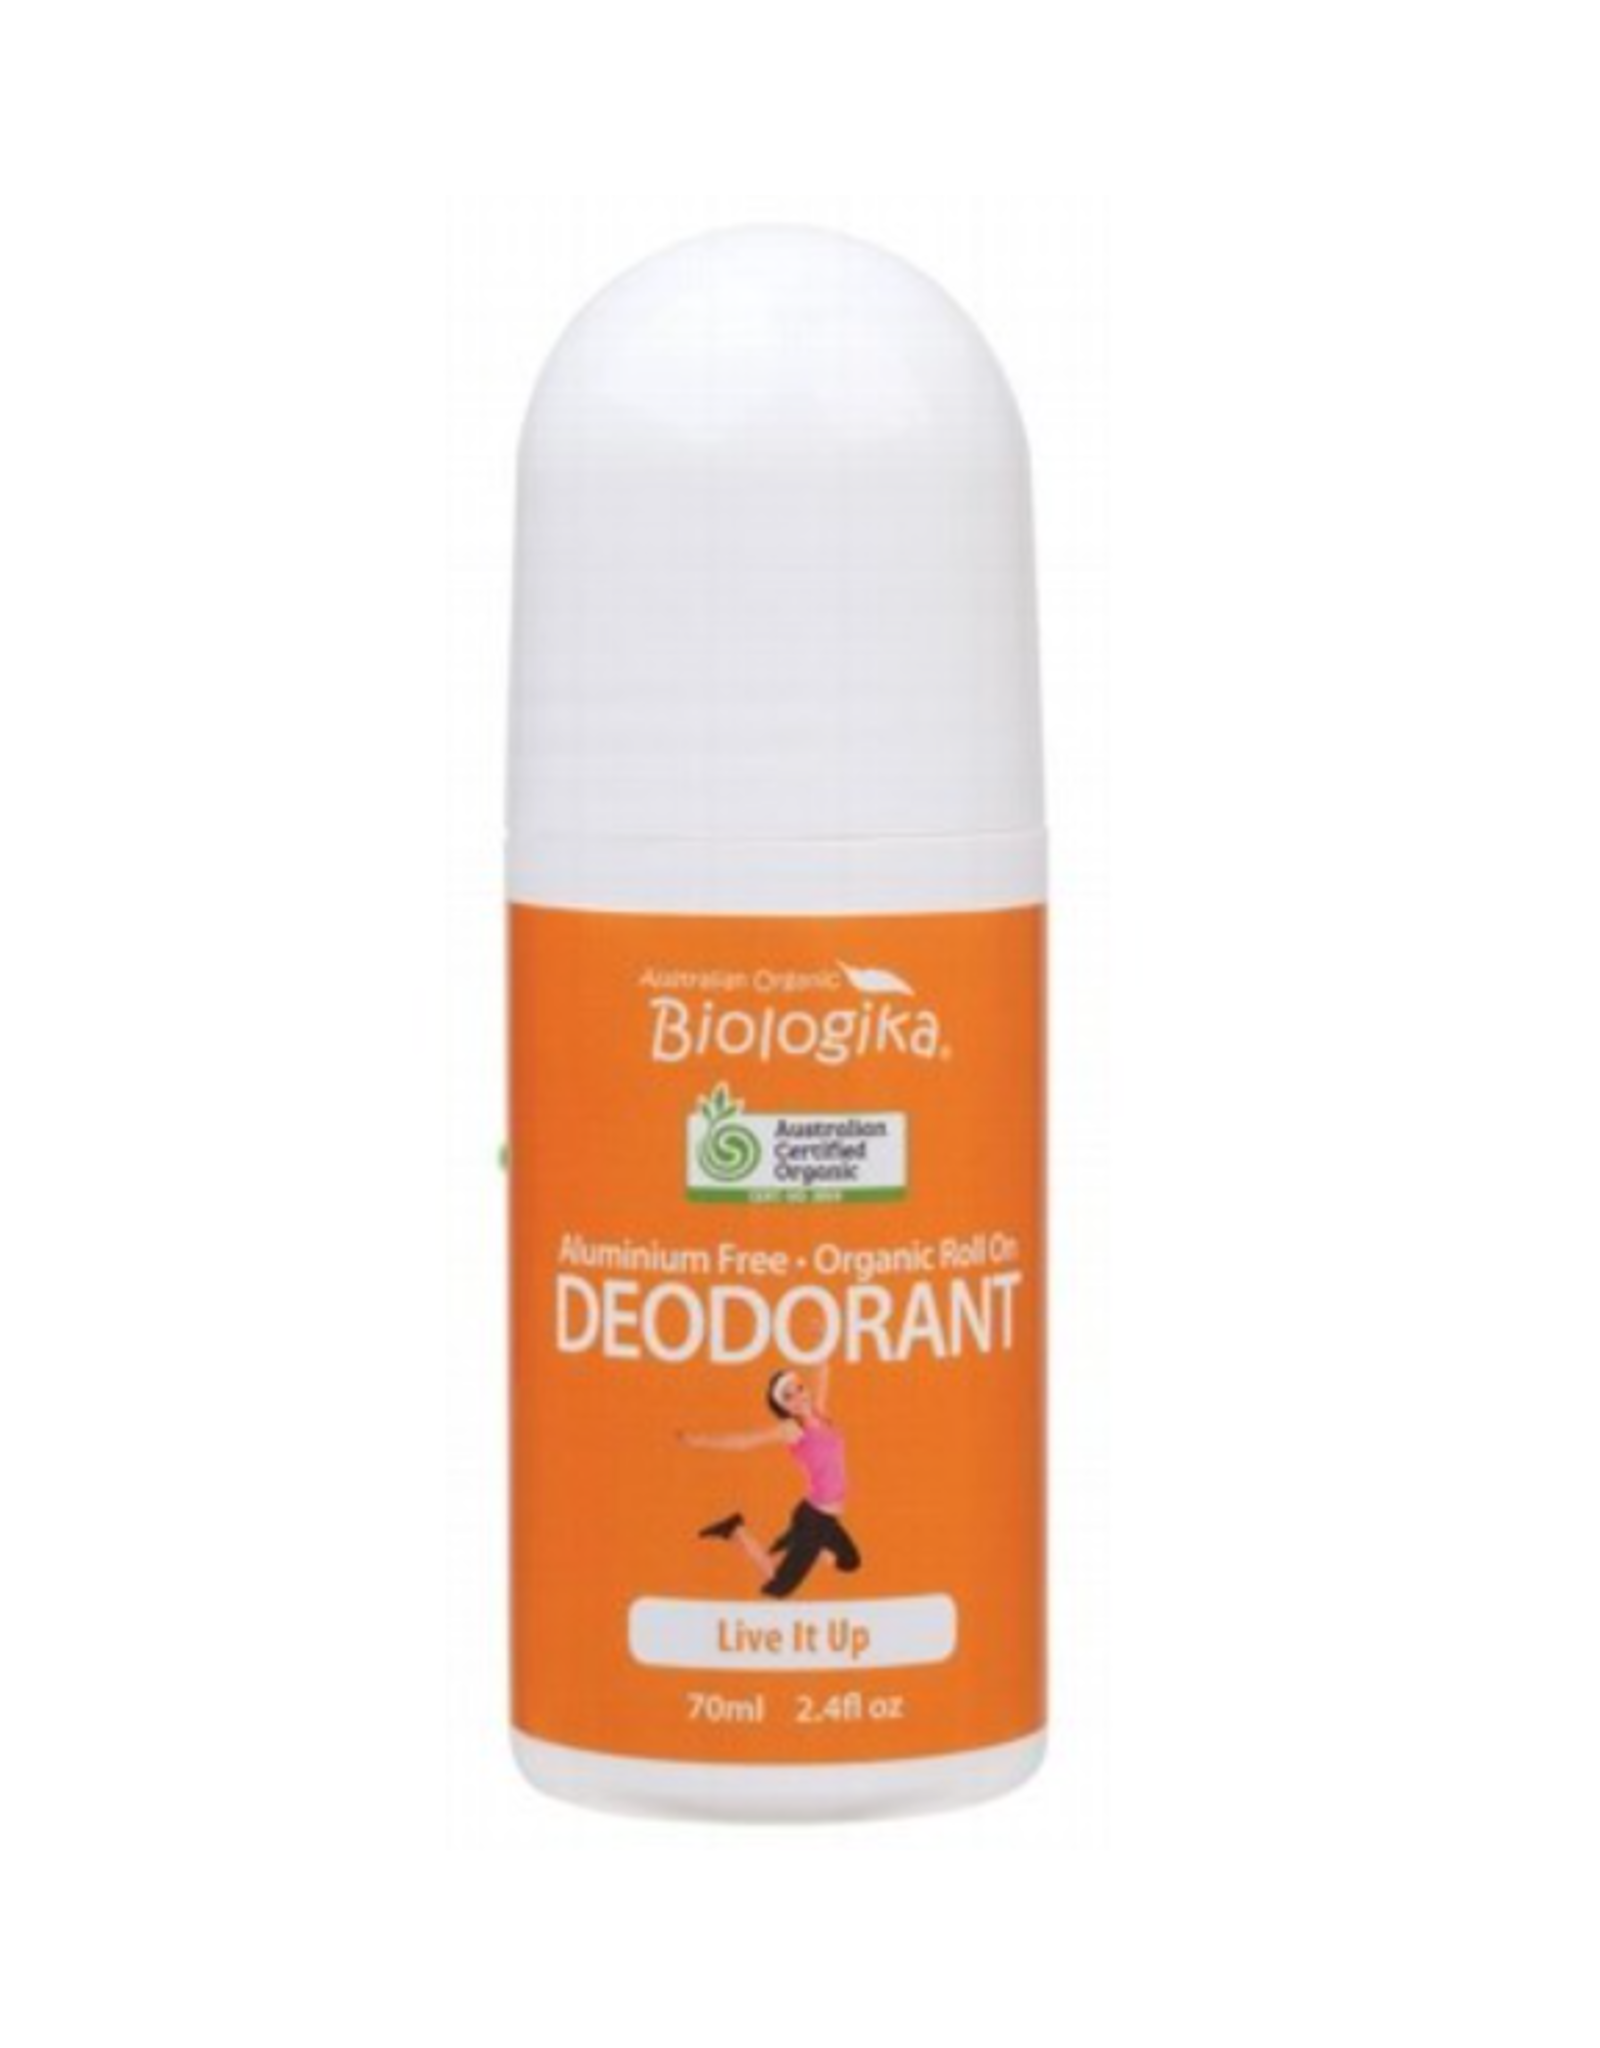 Biologika Deodorant - Live It Up